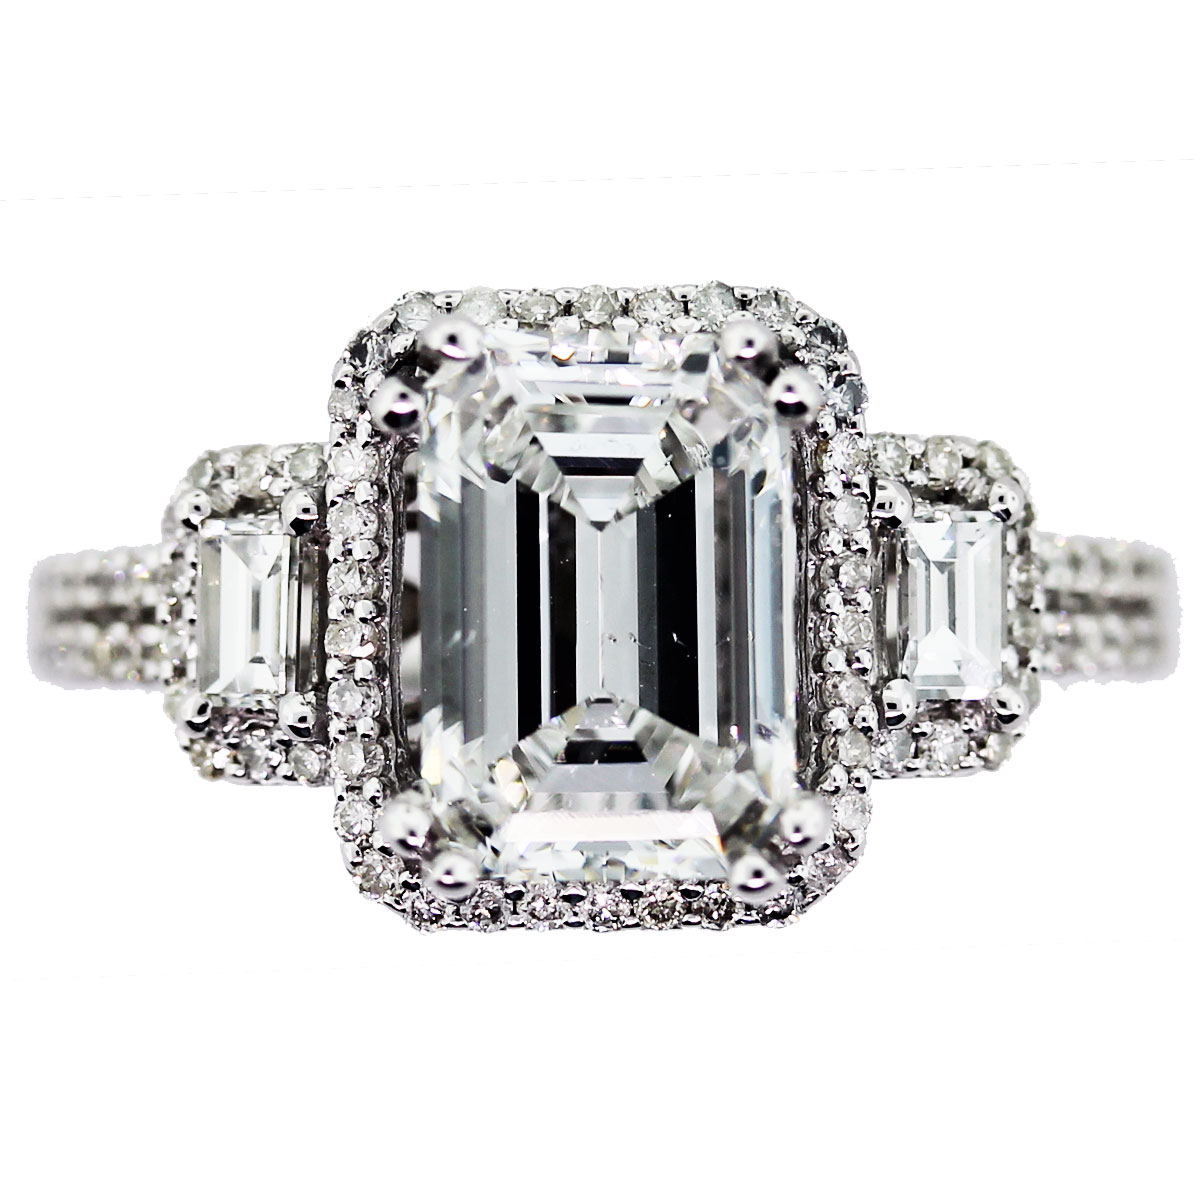 Ring Designs: Engagement Ring Designs Emerald Cut